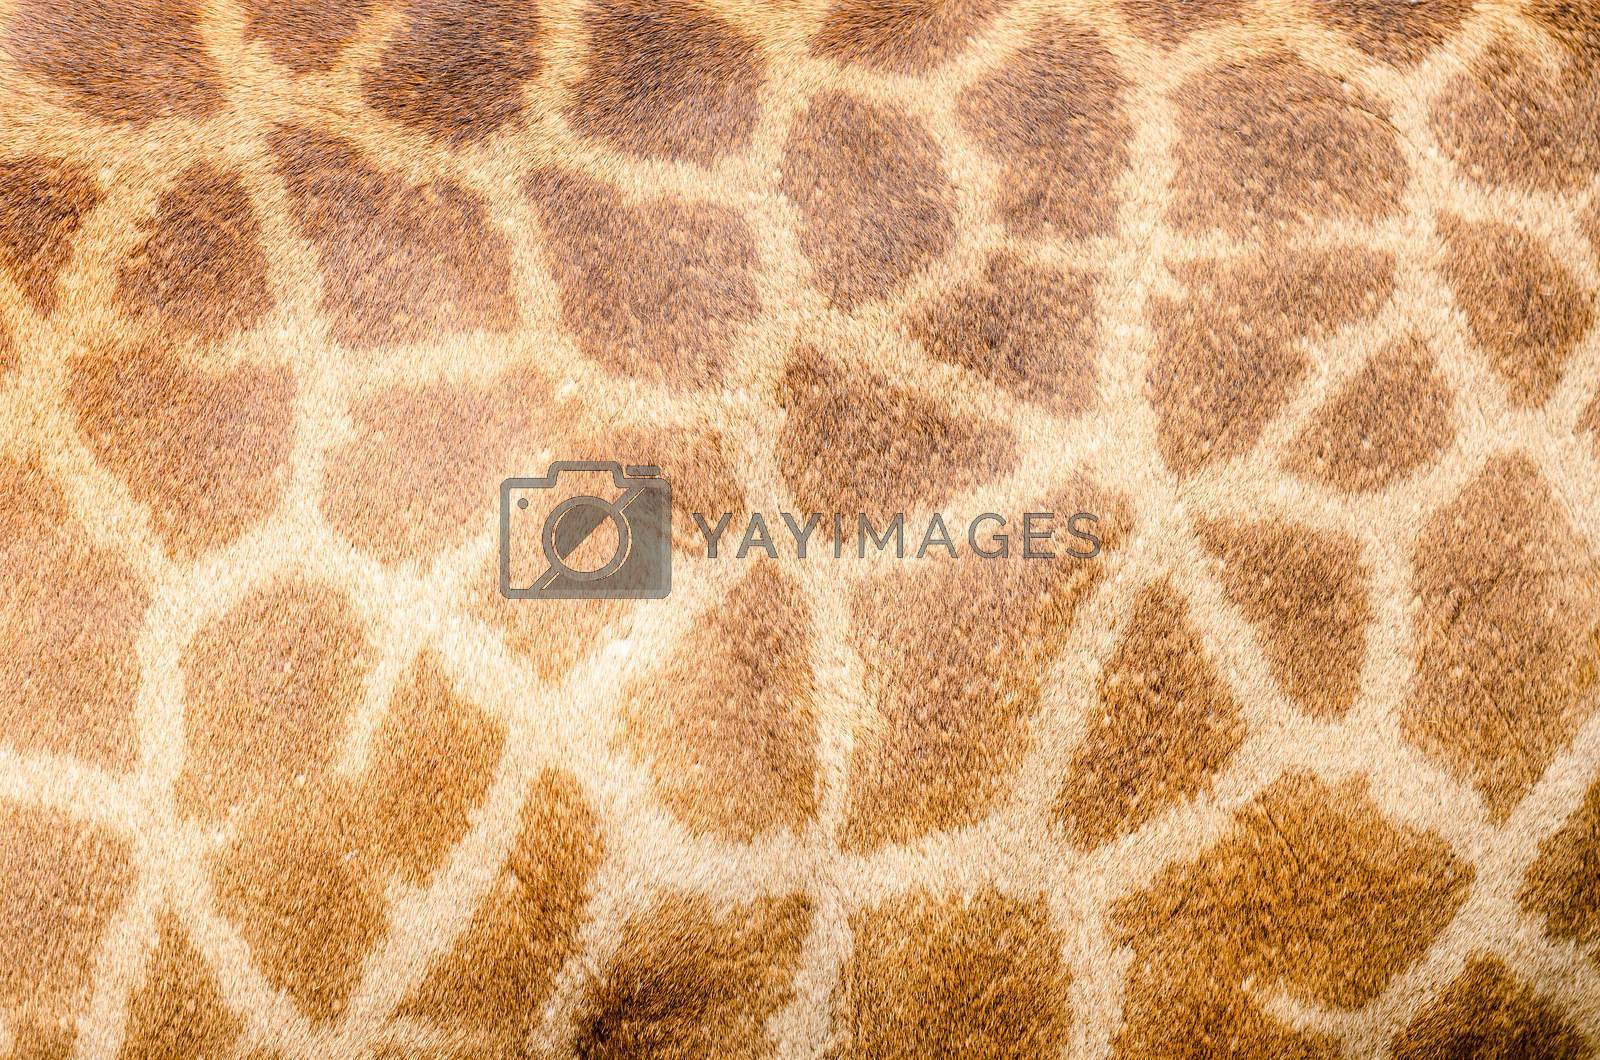 Royalty free image of Genuine leather skin of Giraffe by Gamjai